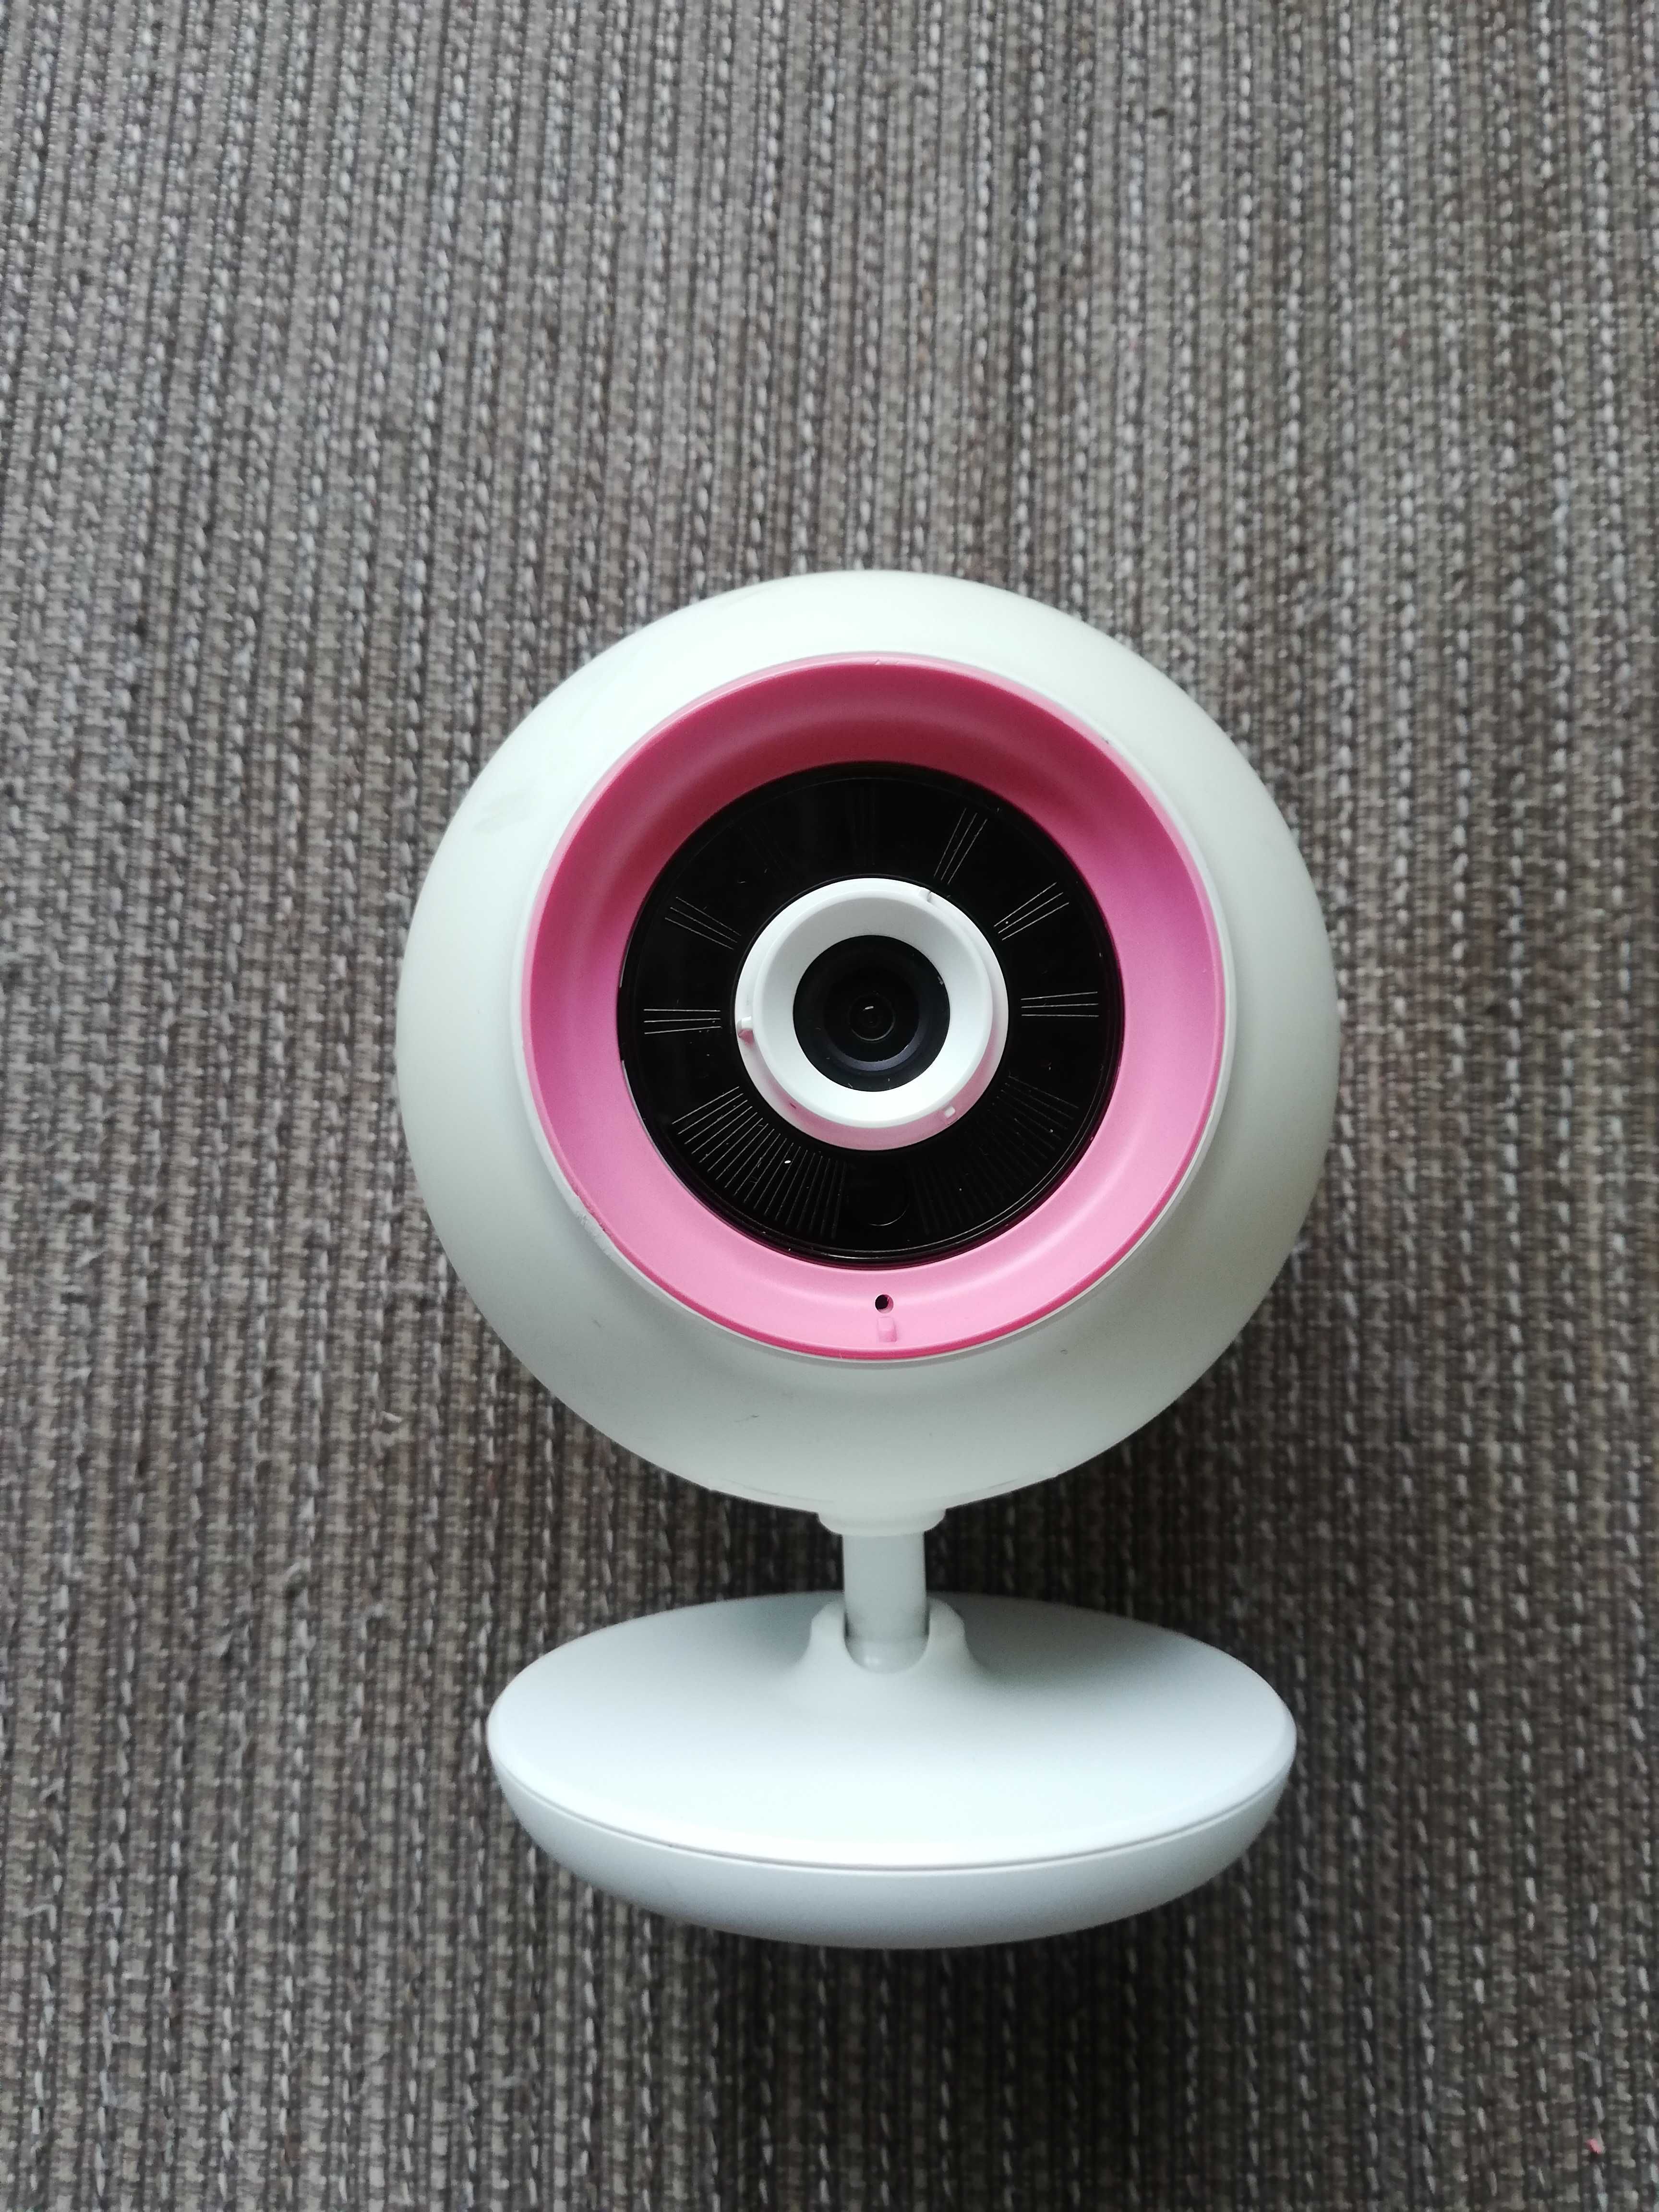 D-LINK DCS-820L Wi-Fi Baby Camera видеобебефон